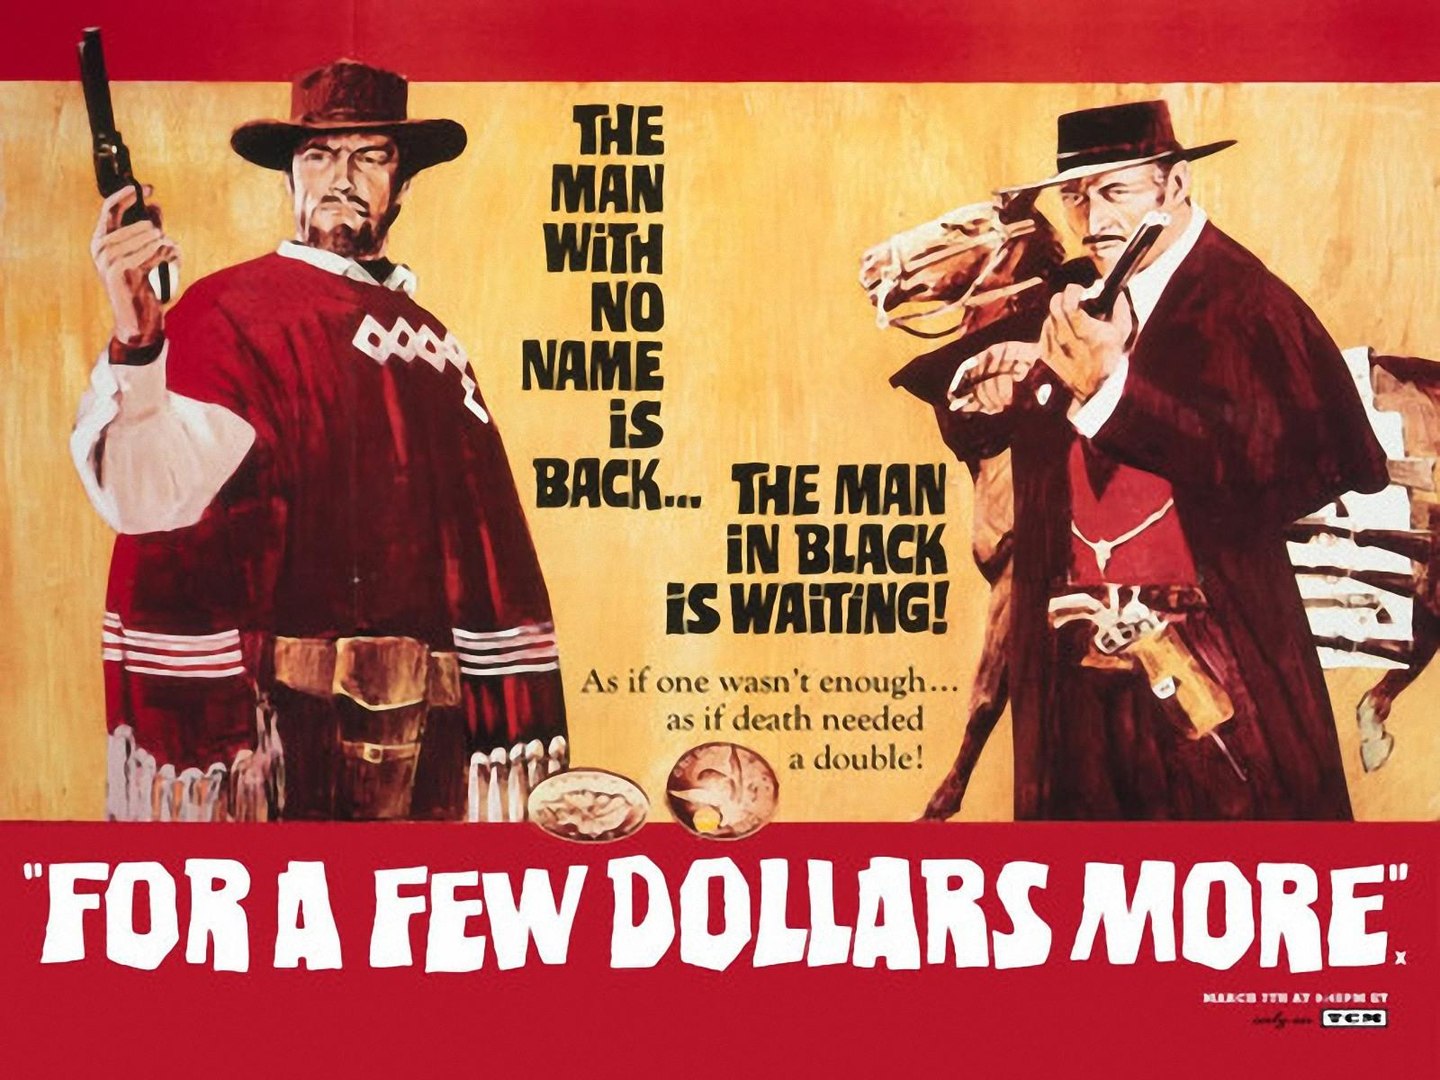 Birkac Dolar Icin For A Few Dollars More Clint Eastwood Dailymotion Video